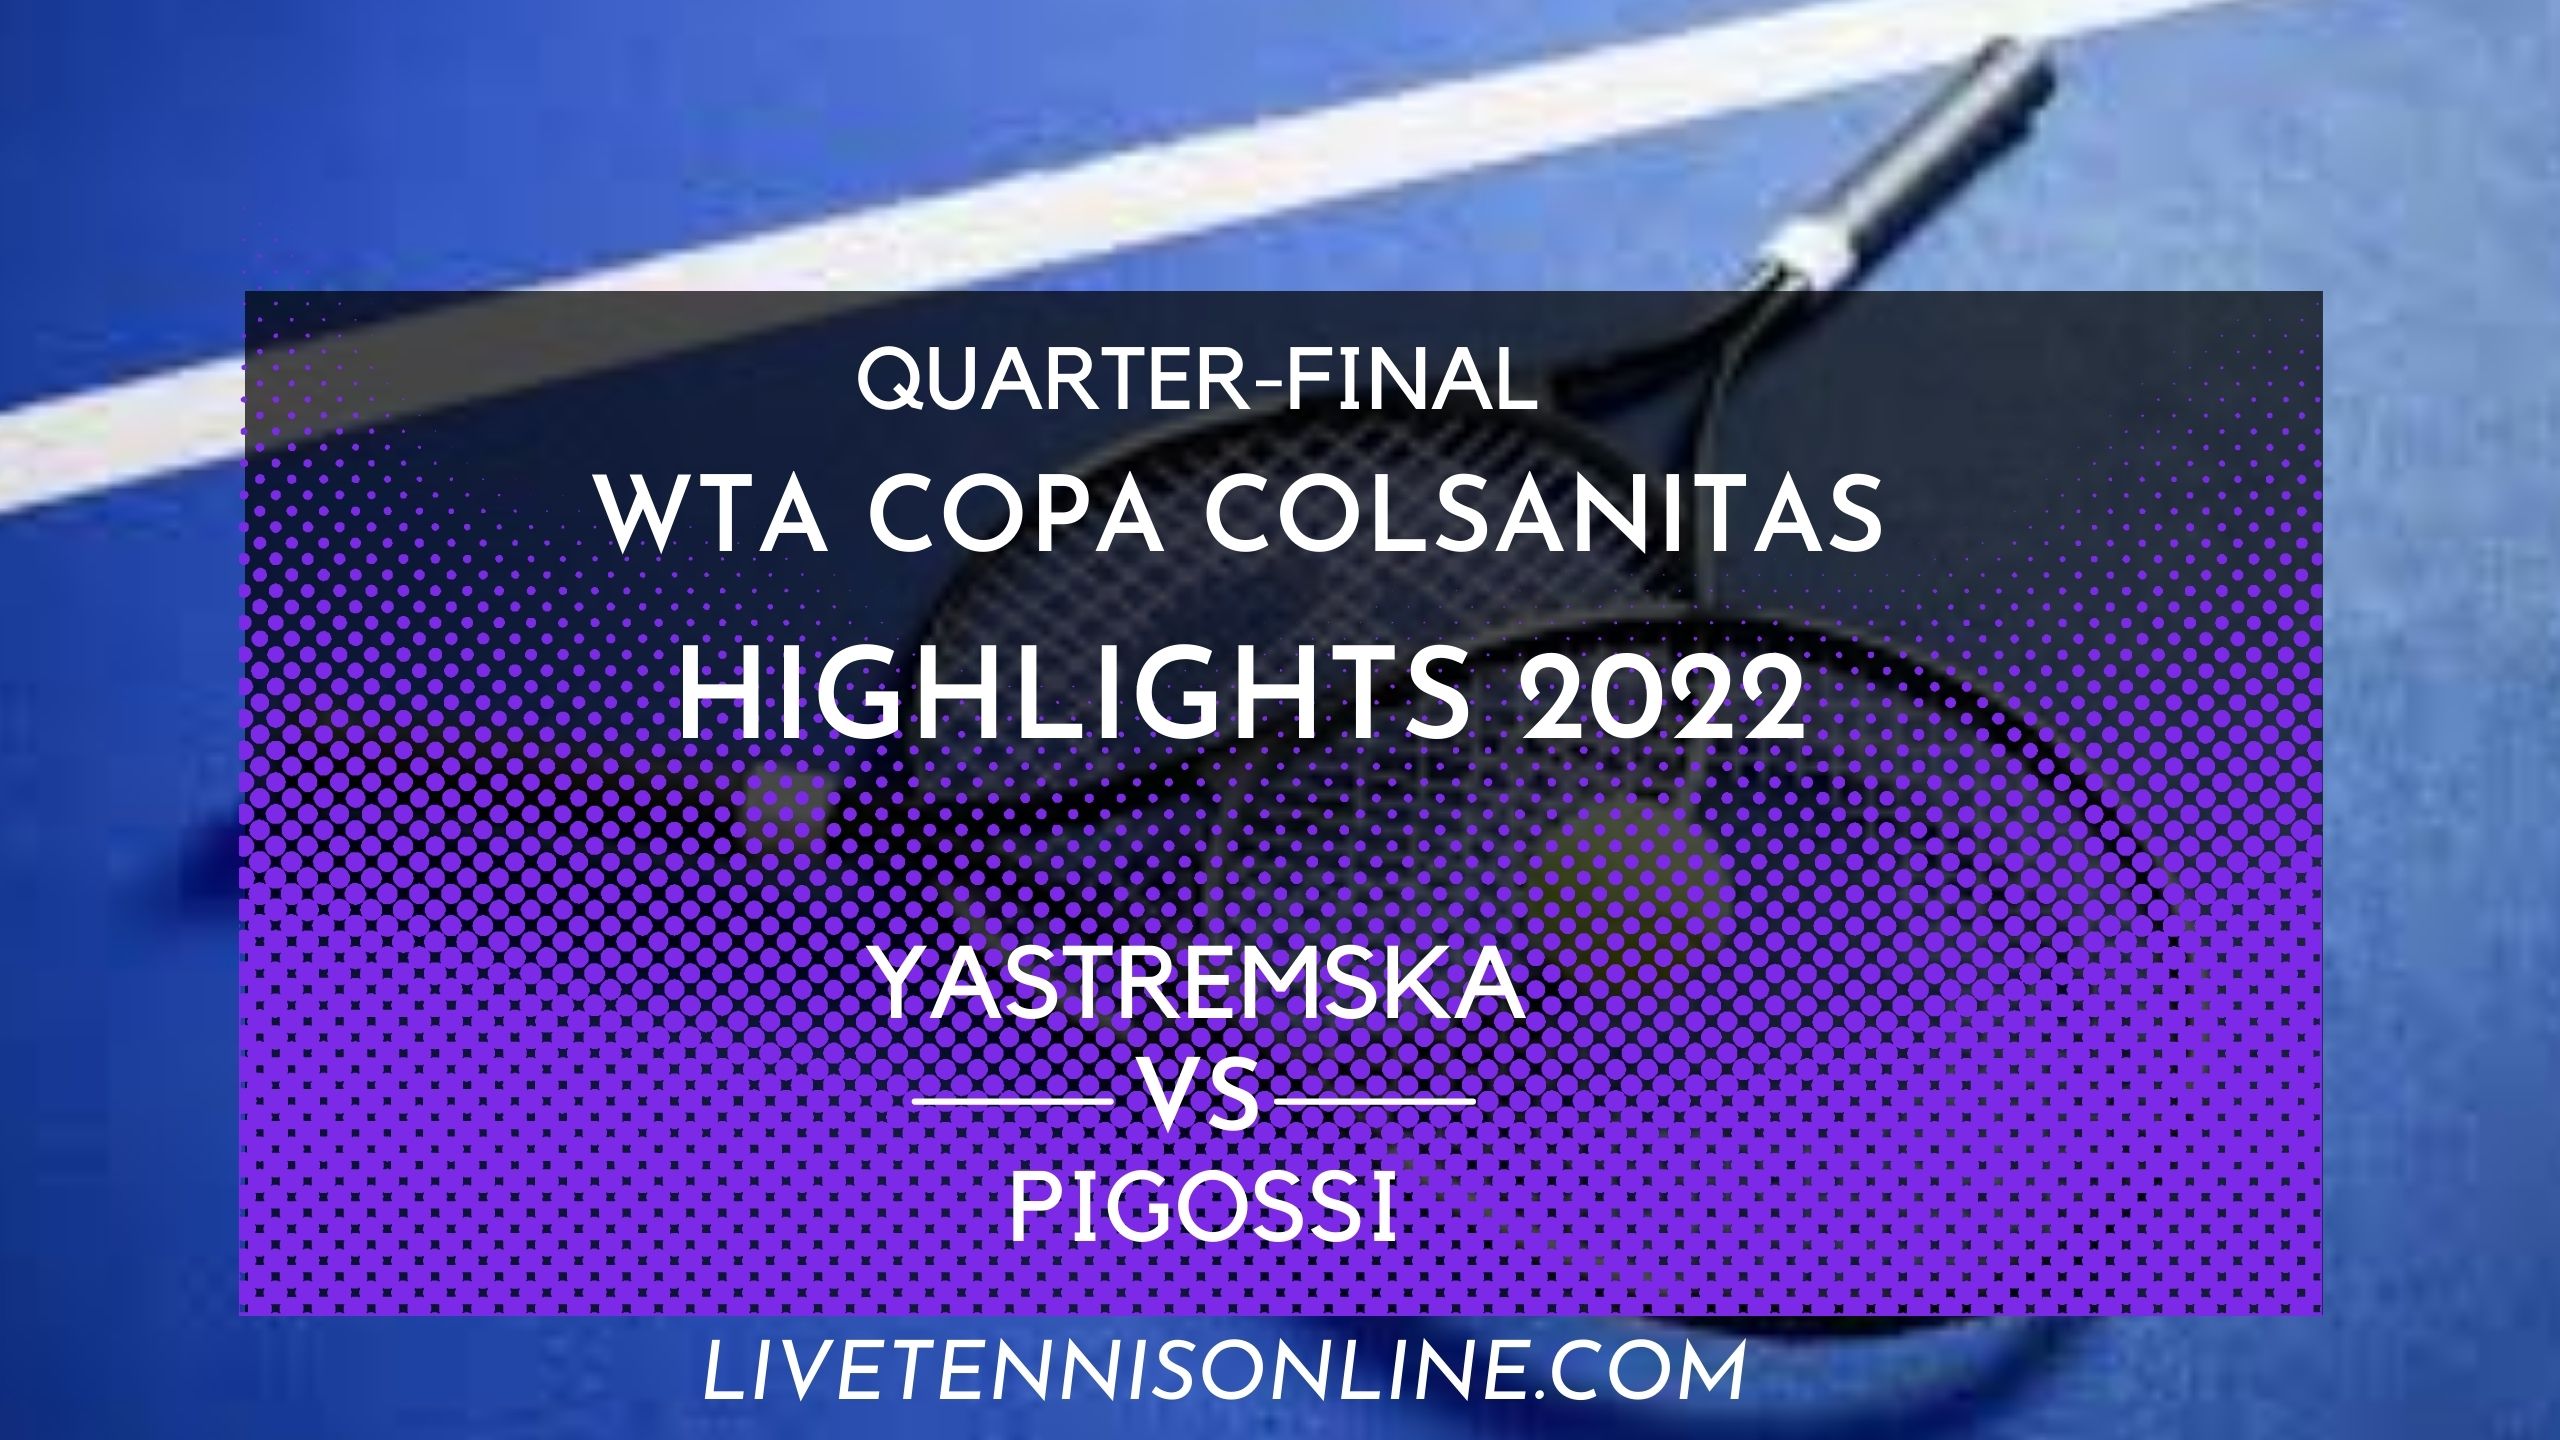 Yastremska Vs Pigossi QF Highlights 2022